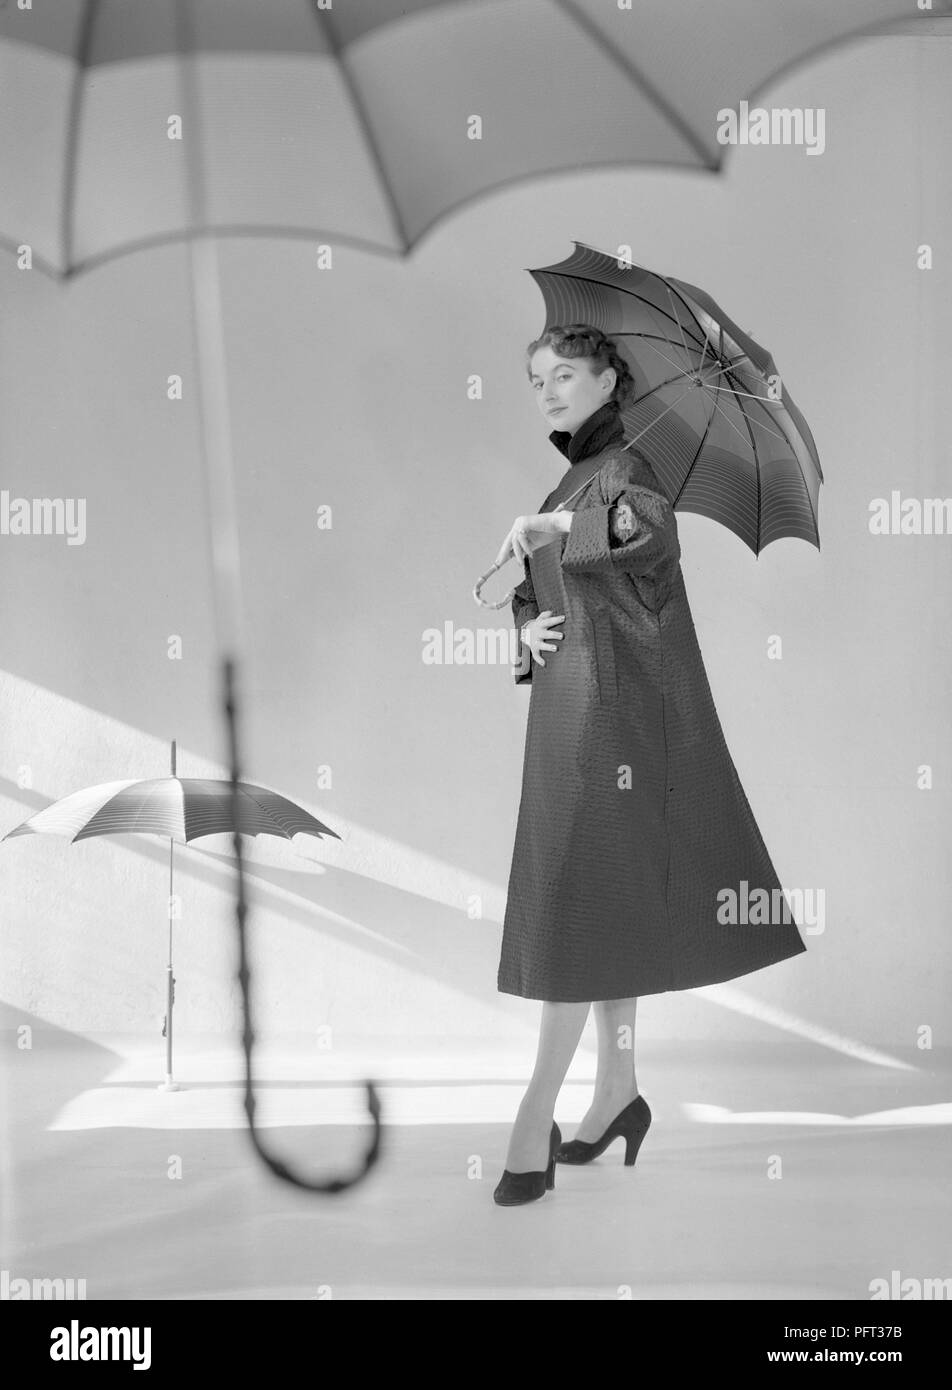 50s fashion women Black and White Stock Photos & Images - Alamy